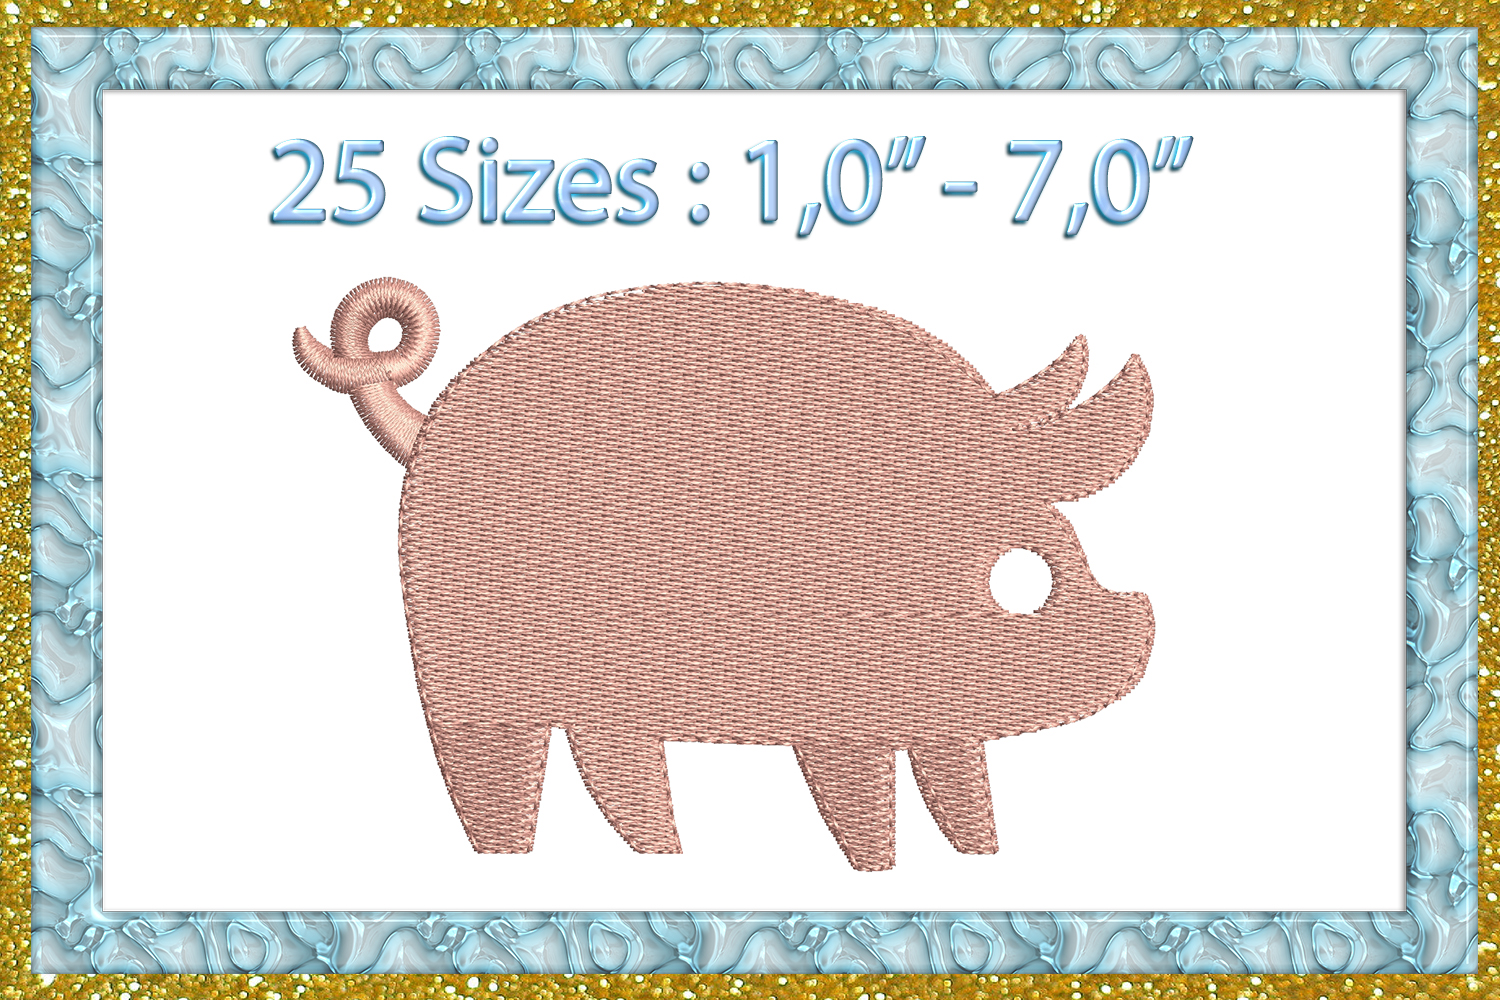 Mini Pig embroidery design